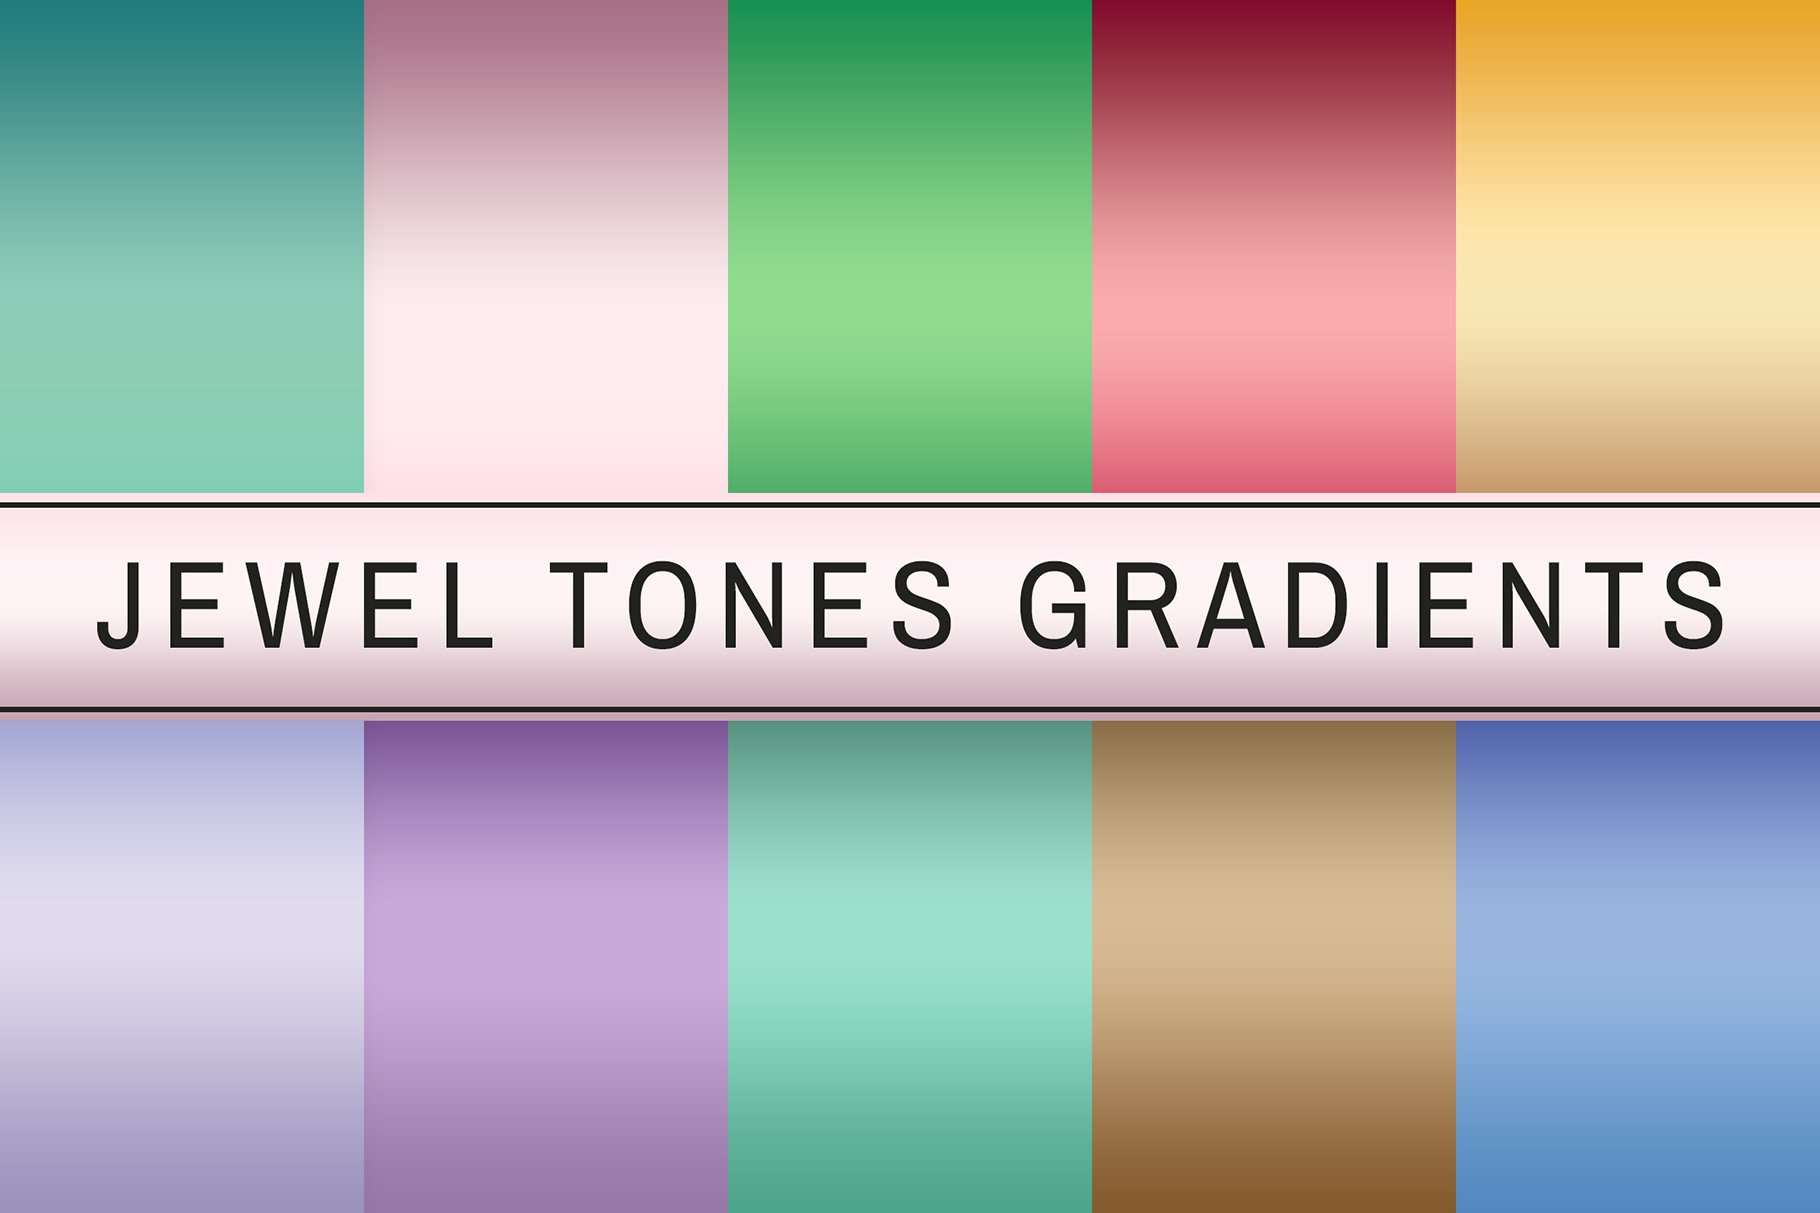 Jewel Tones Gradients cover image.